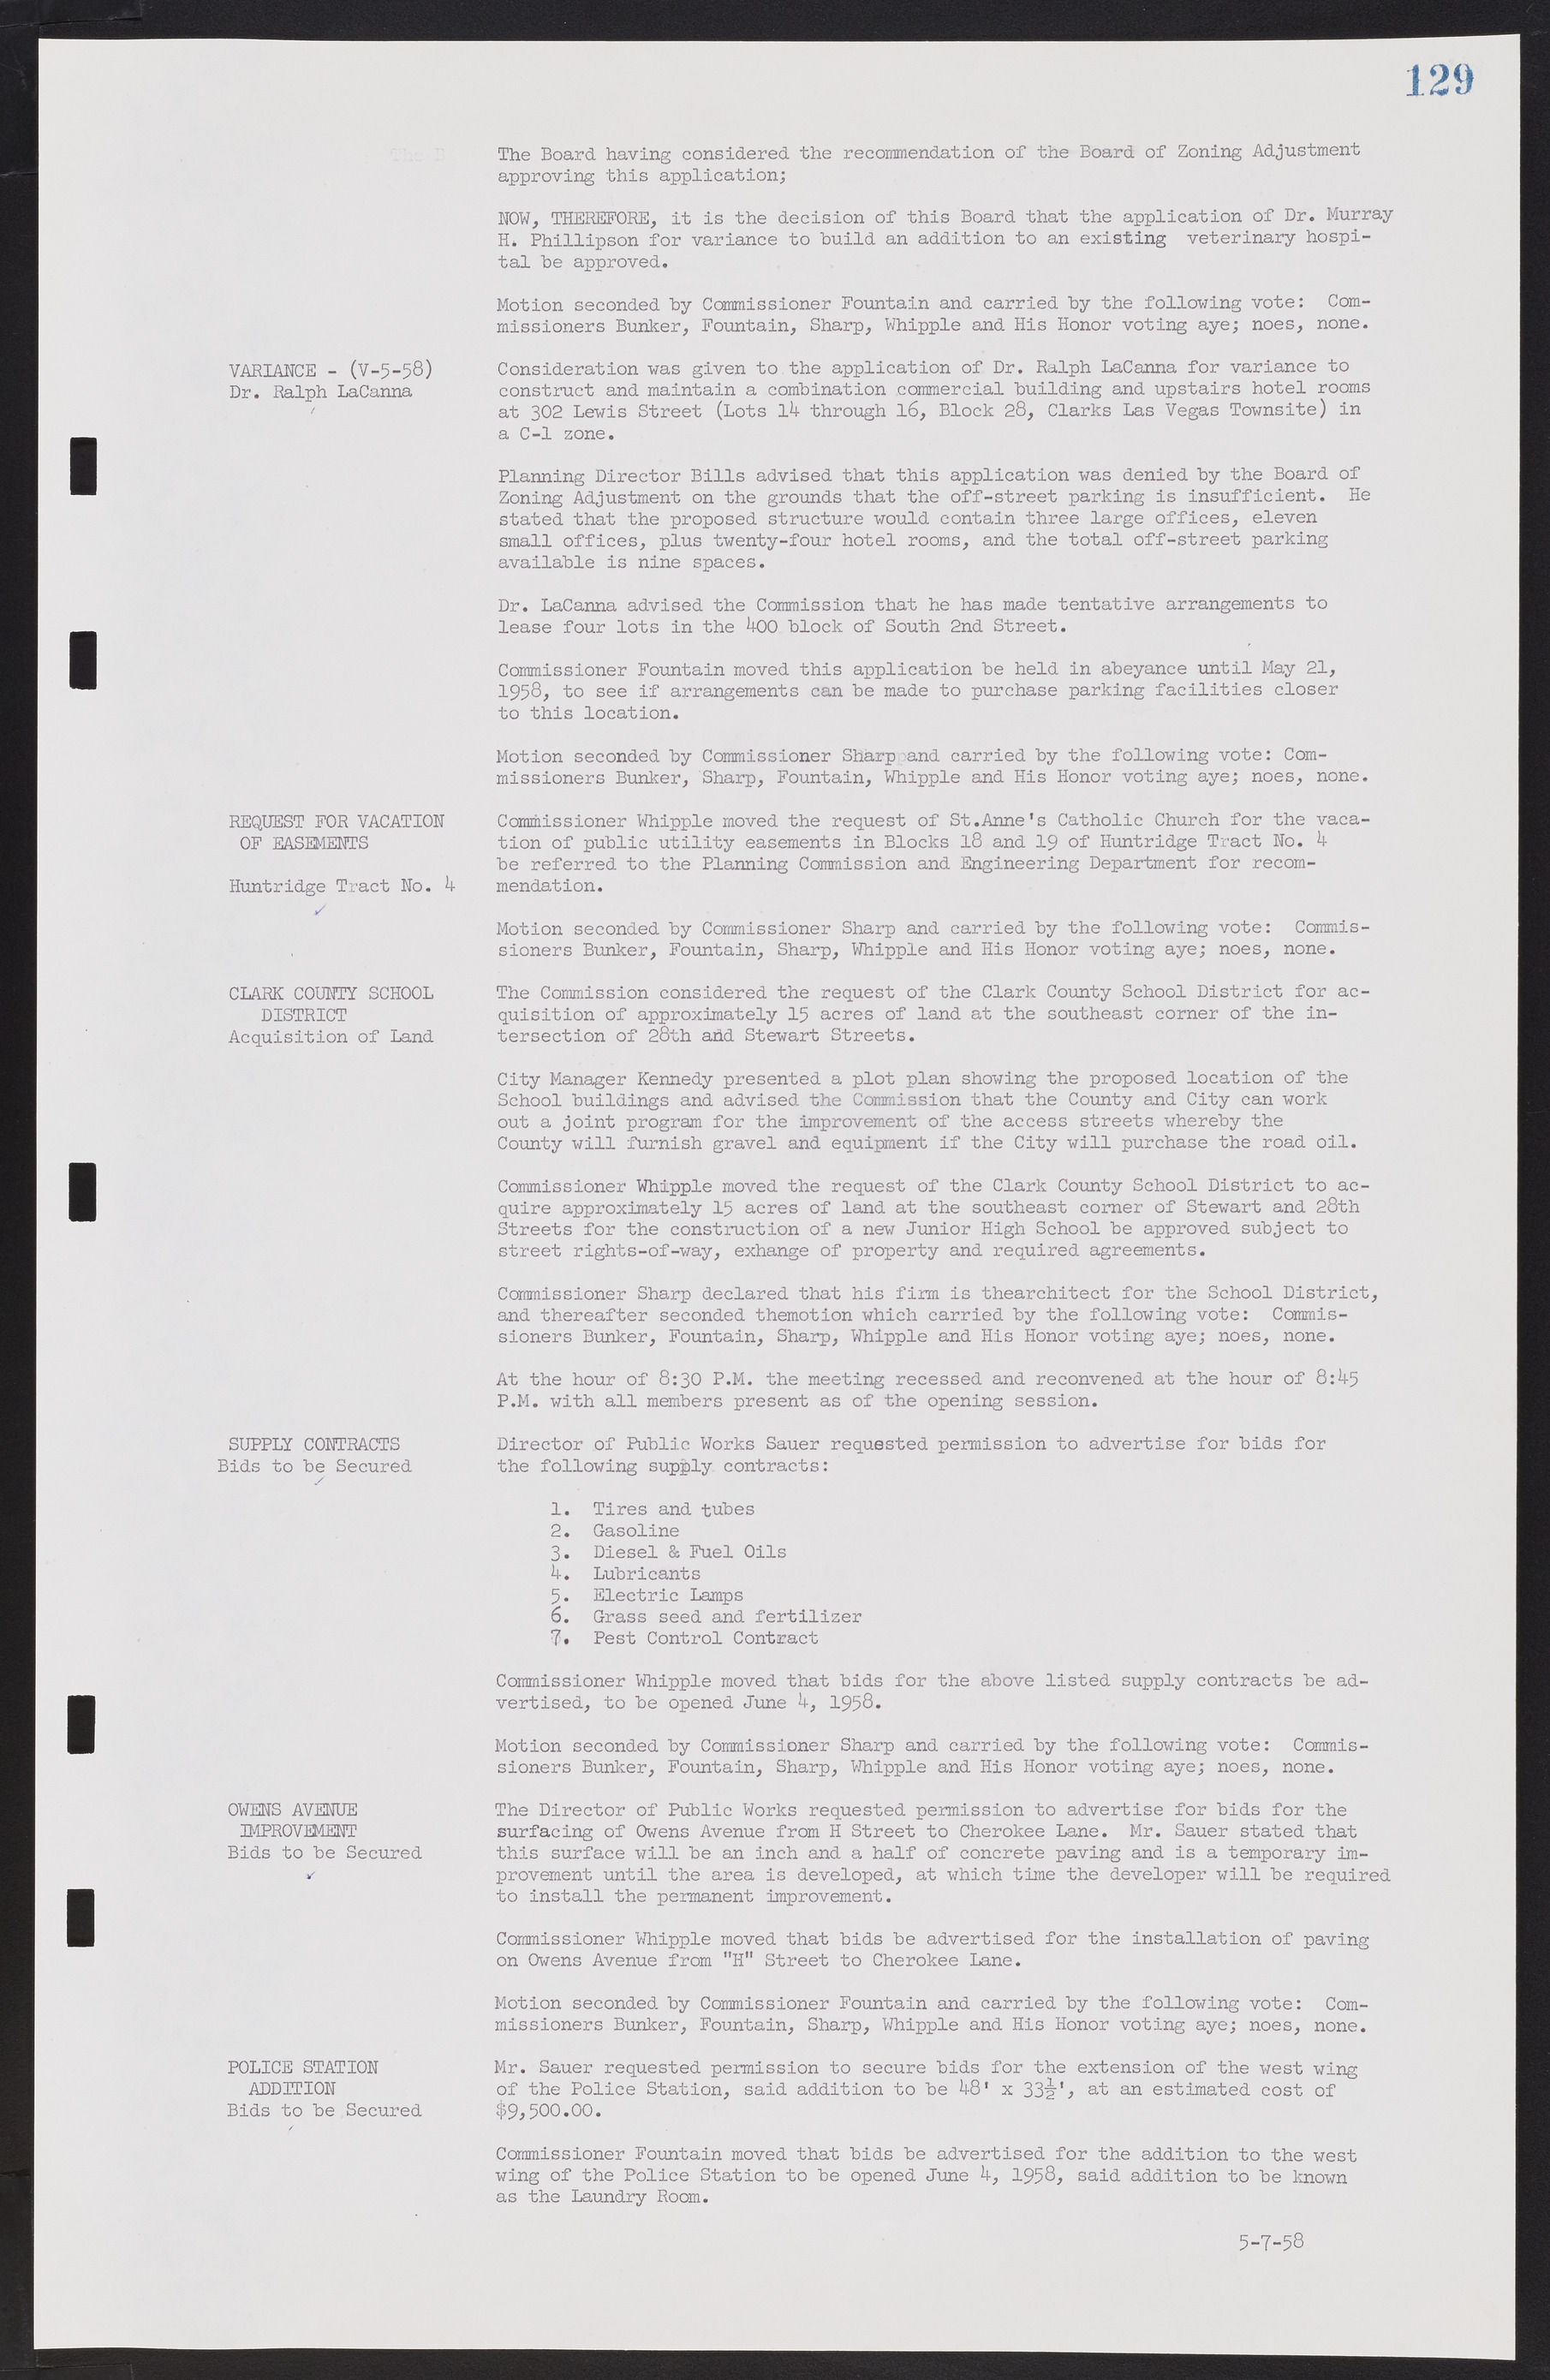 Las Vegas City Commission Minutes, November 20, 1957 to December 2, 1959, lvc000011-133